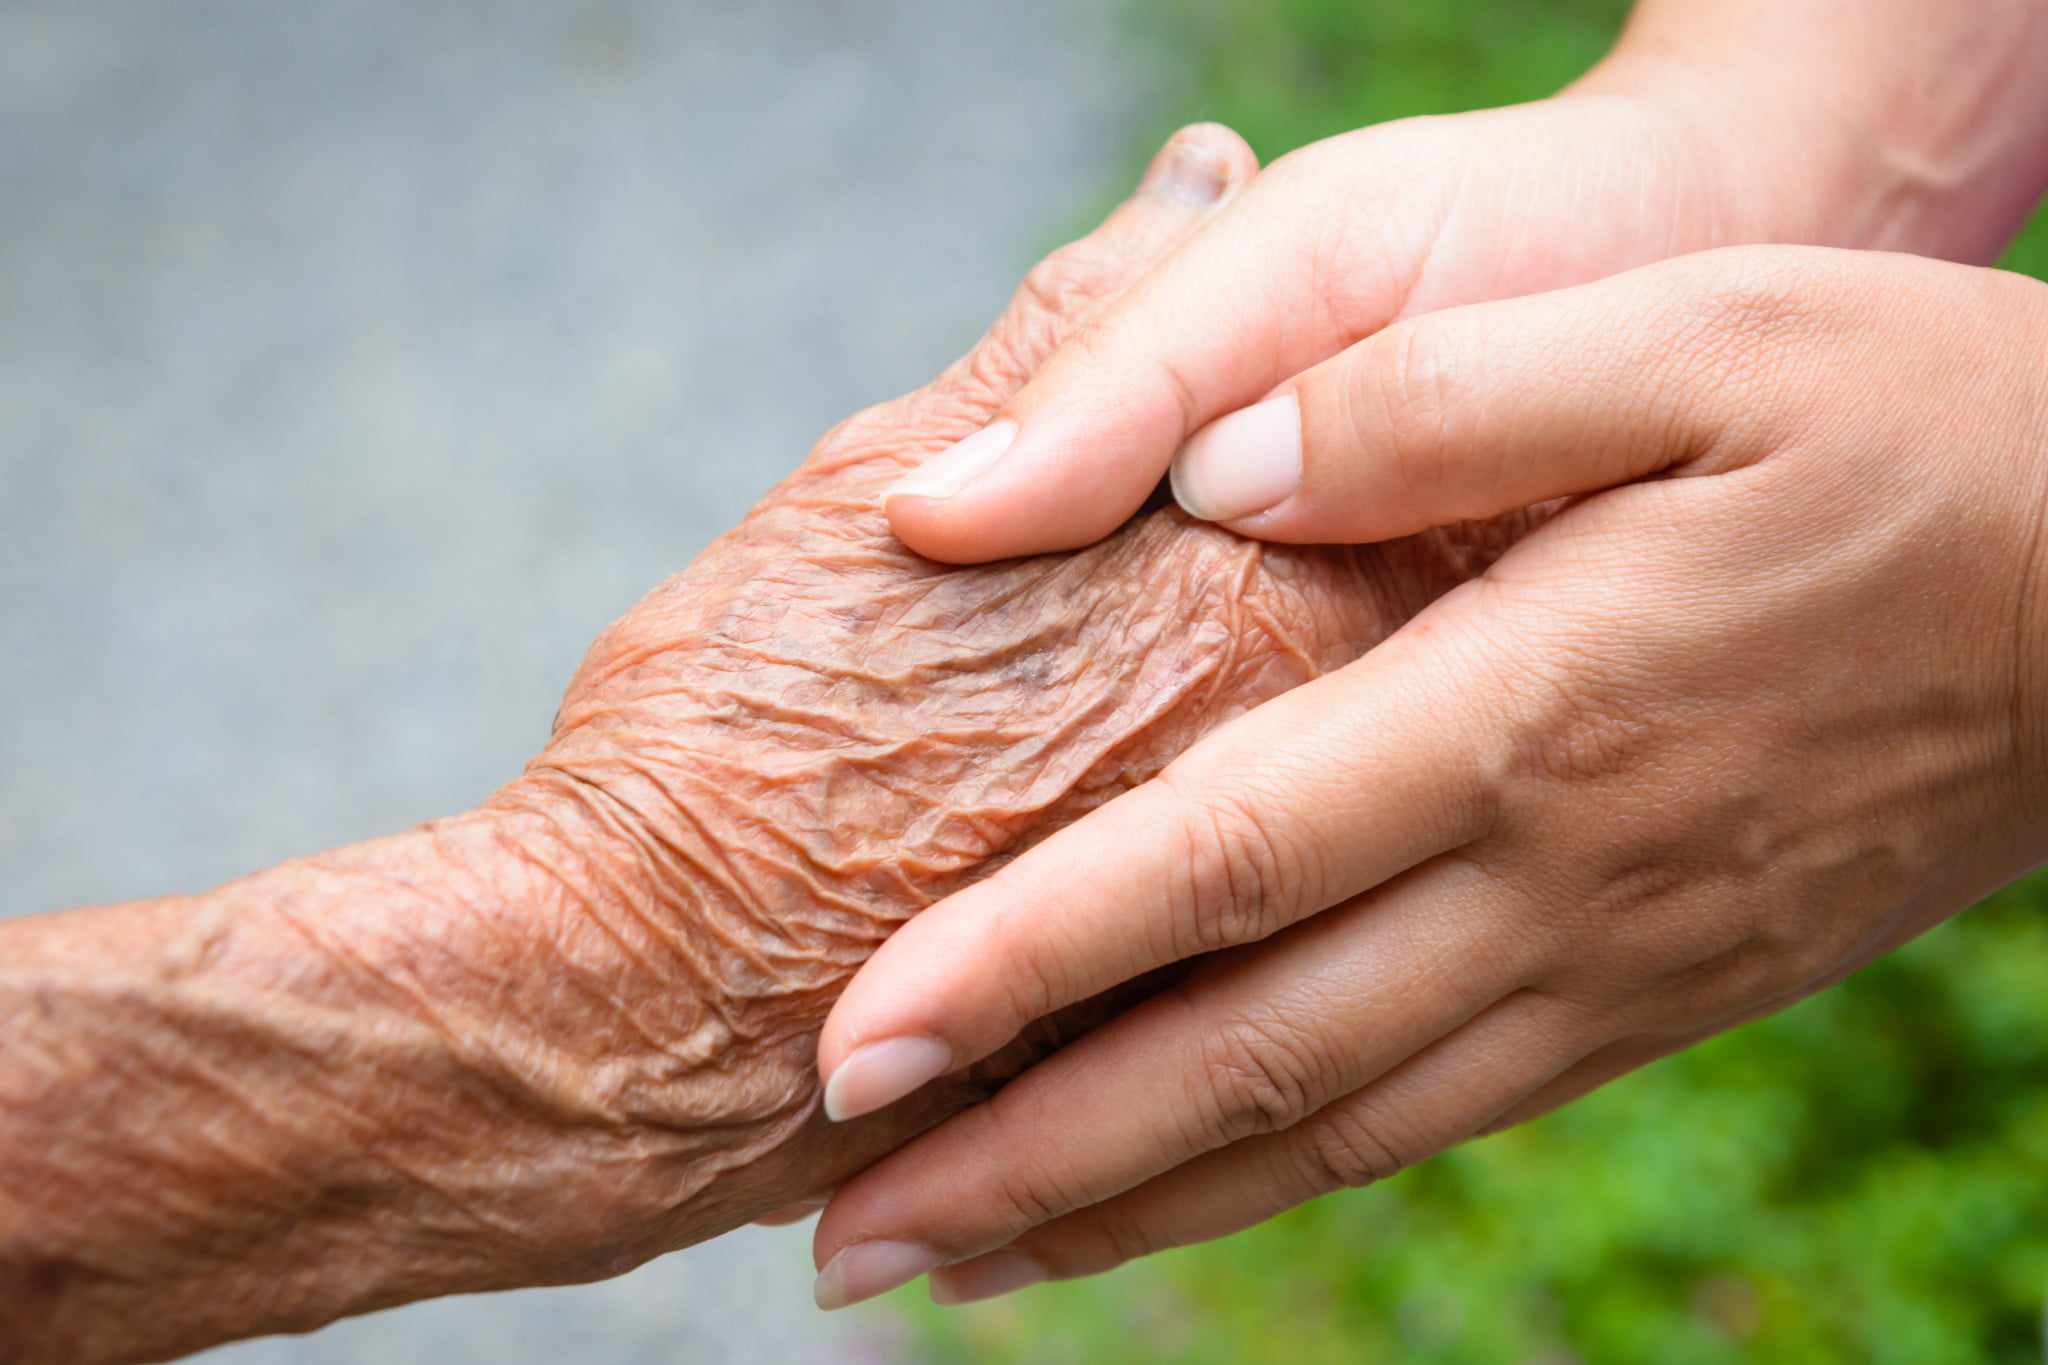 dementia-friendly communities: older hand held by younger hands